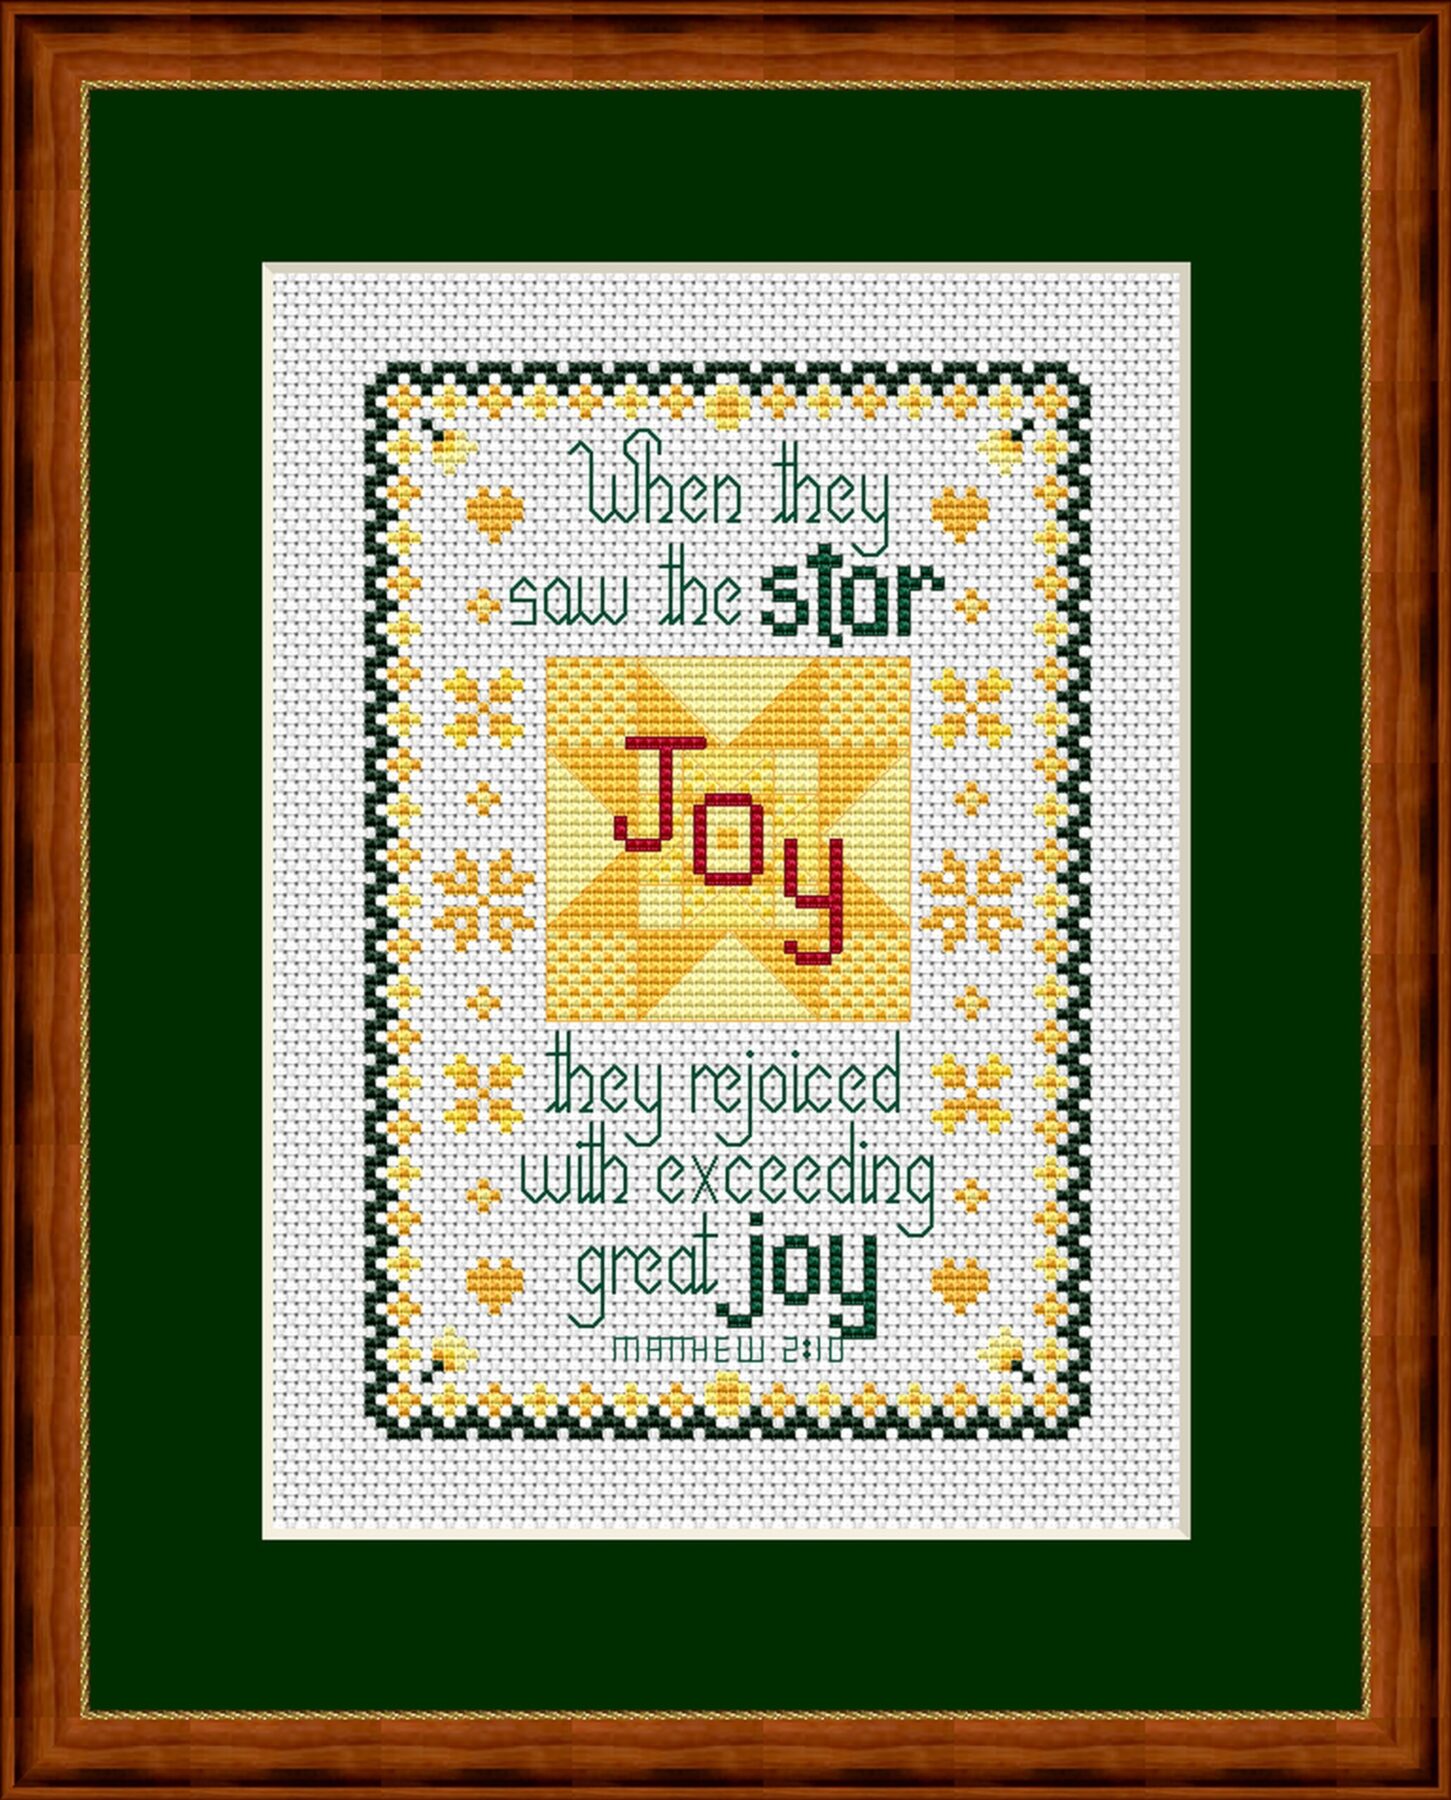 Exceeding Great Joy Christmas Bible Verse Cross Stitch Pattern 926